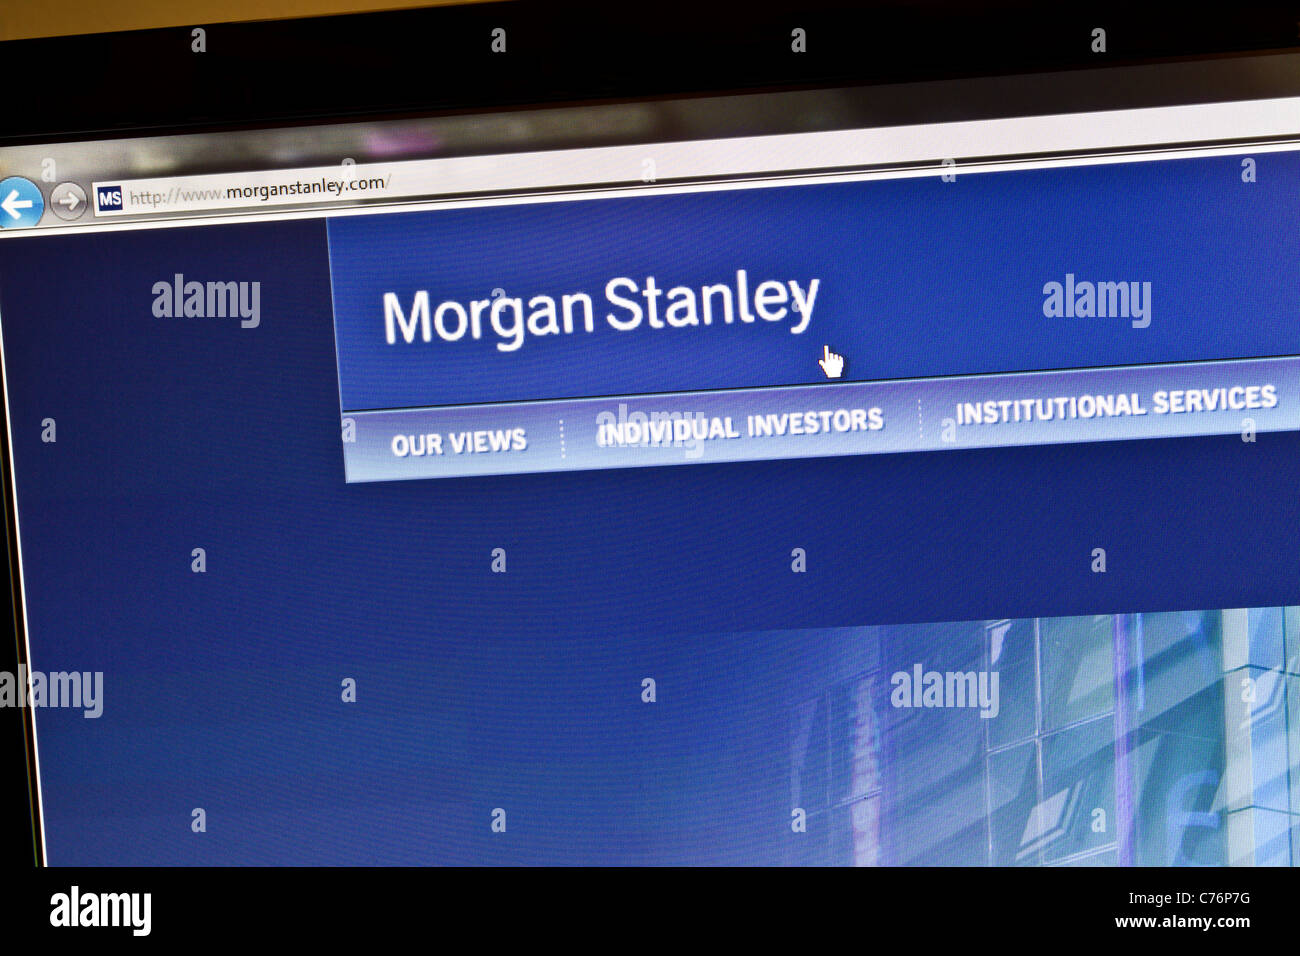 Morgan Stanley bank website on computer screen Stock Photo